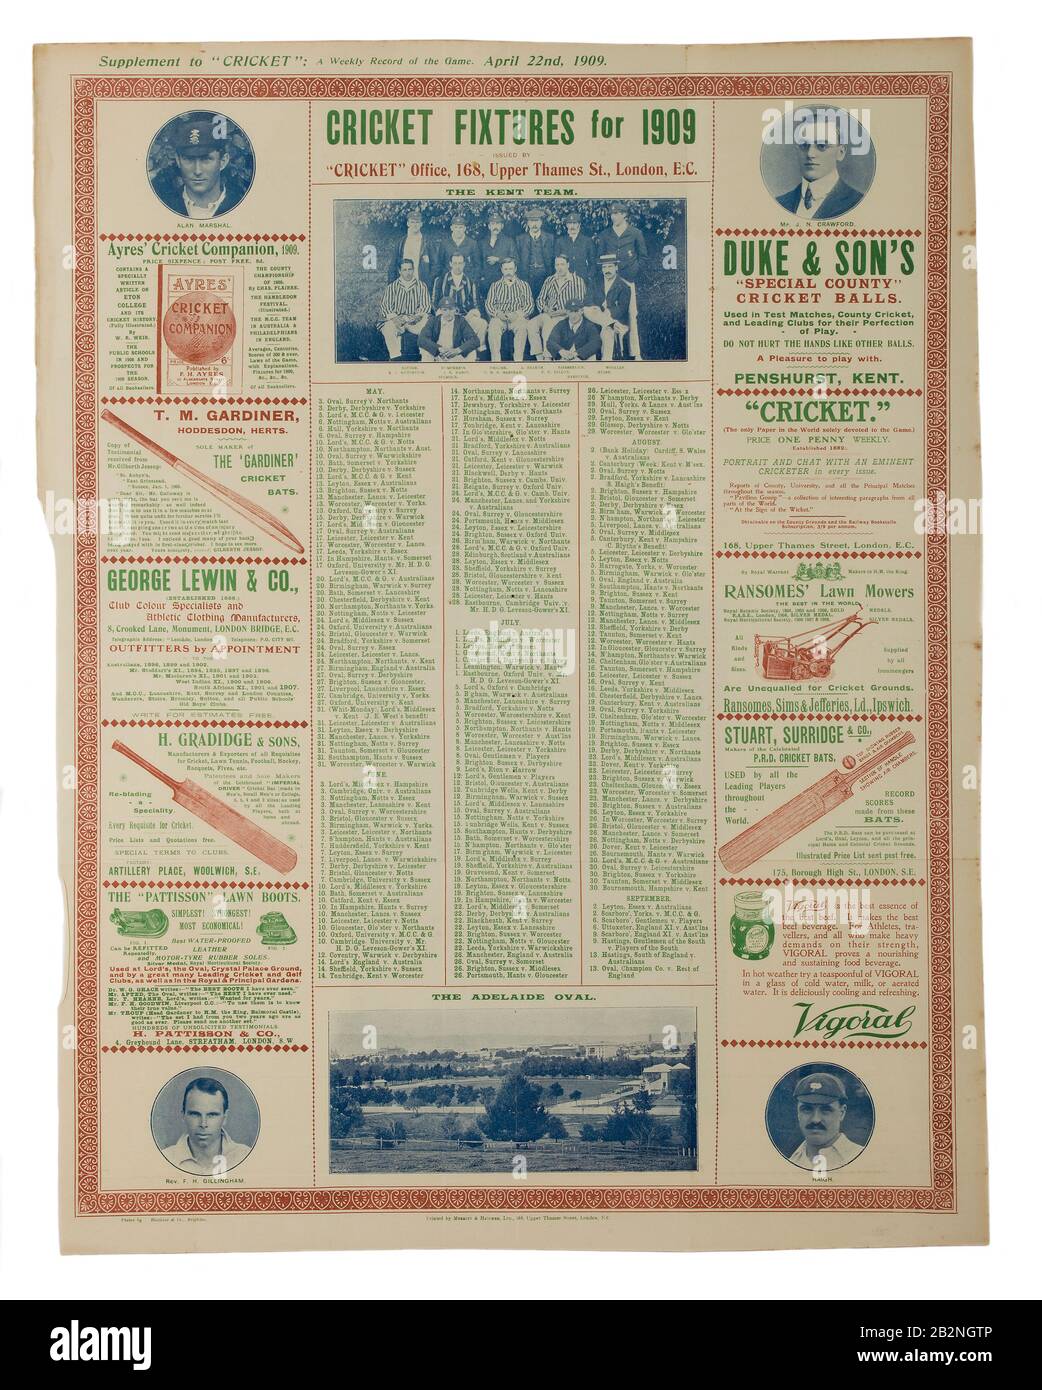 1909 Cricket Fixtures poster Stock Photo